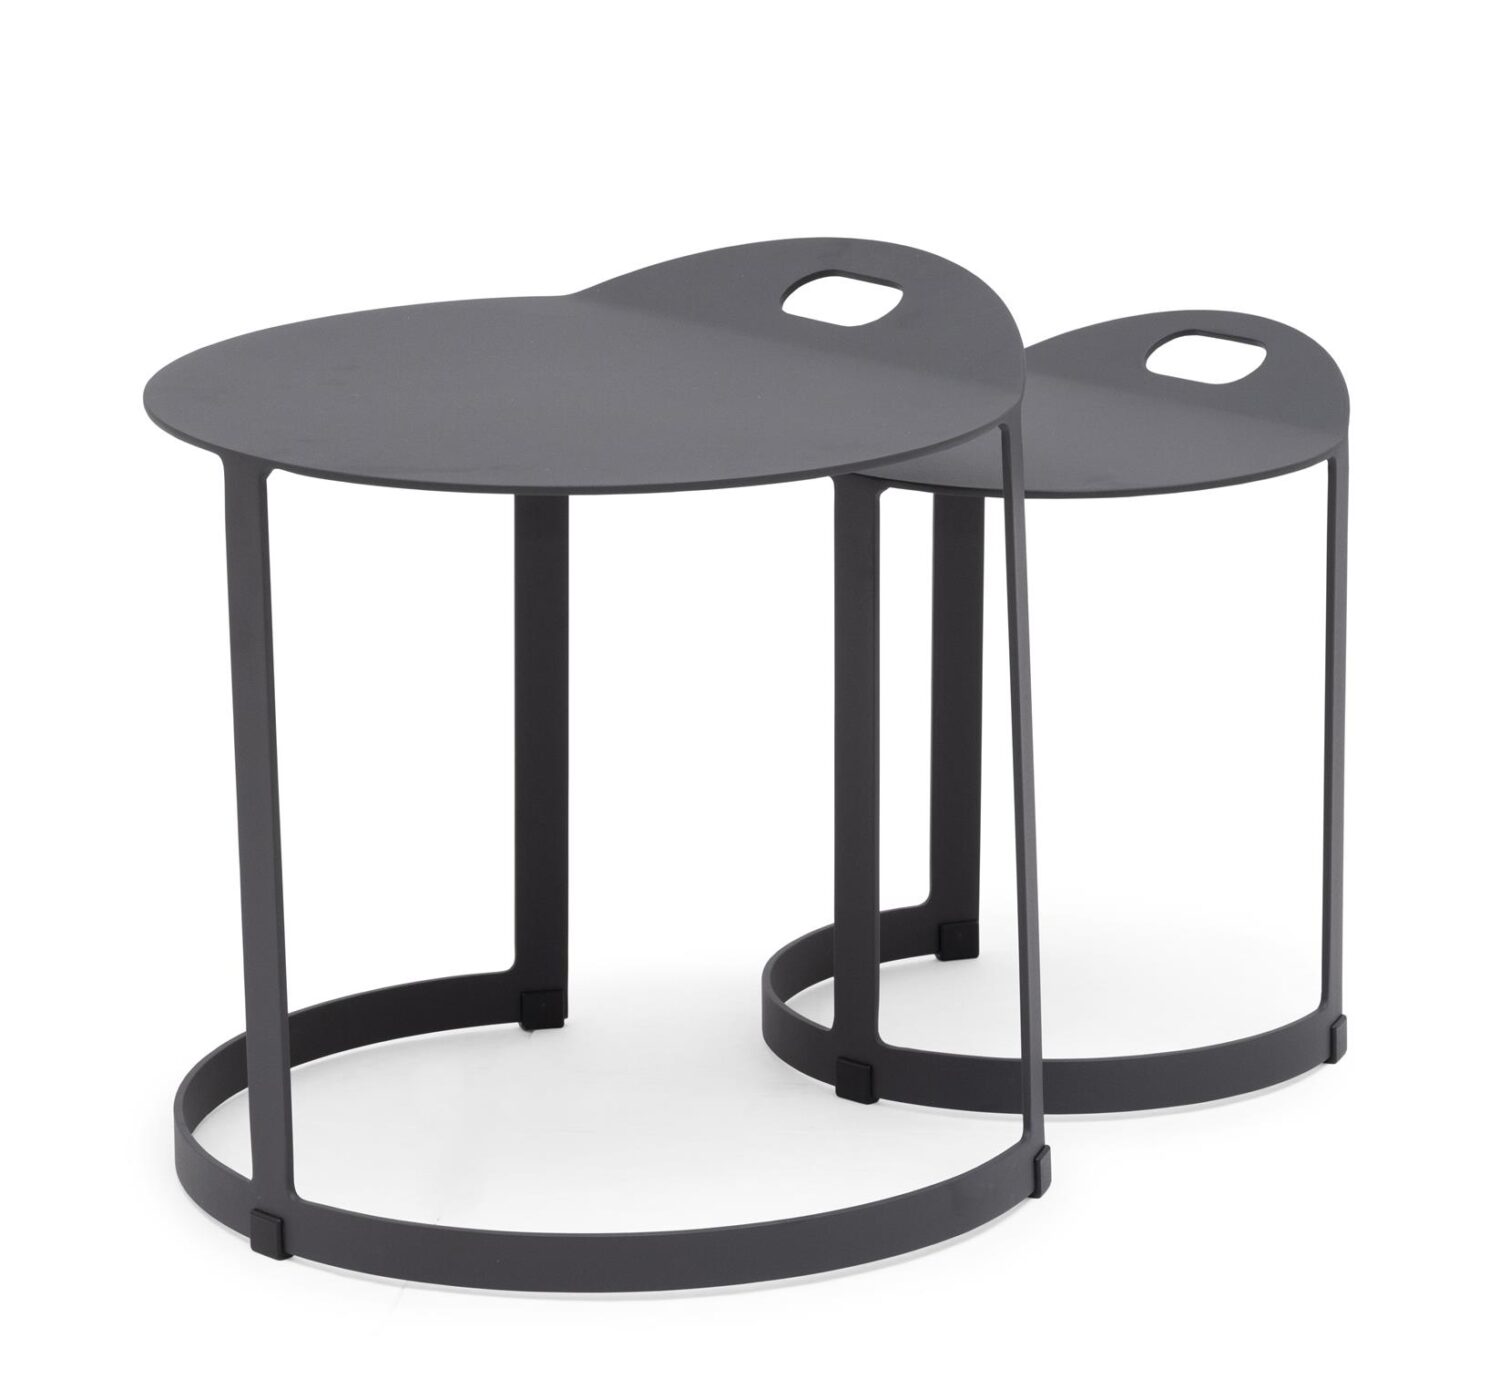 2-delat satsbord i svart aluminium.